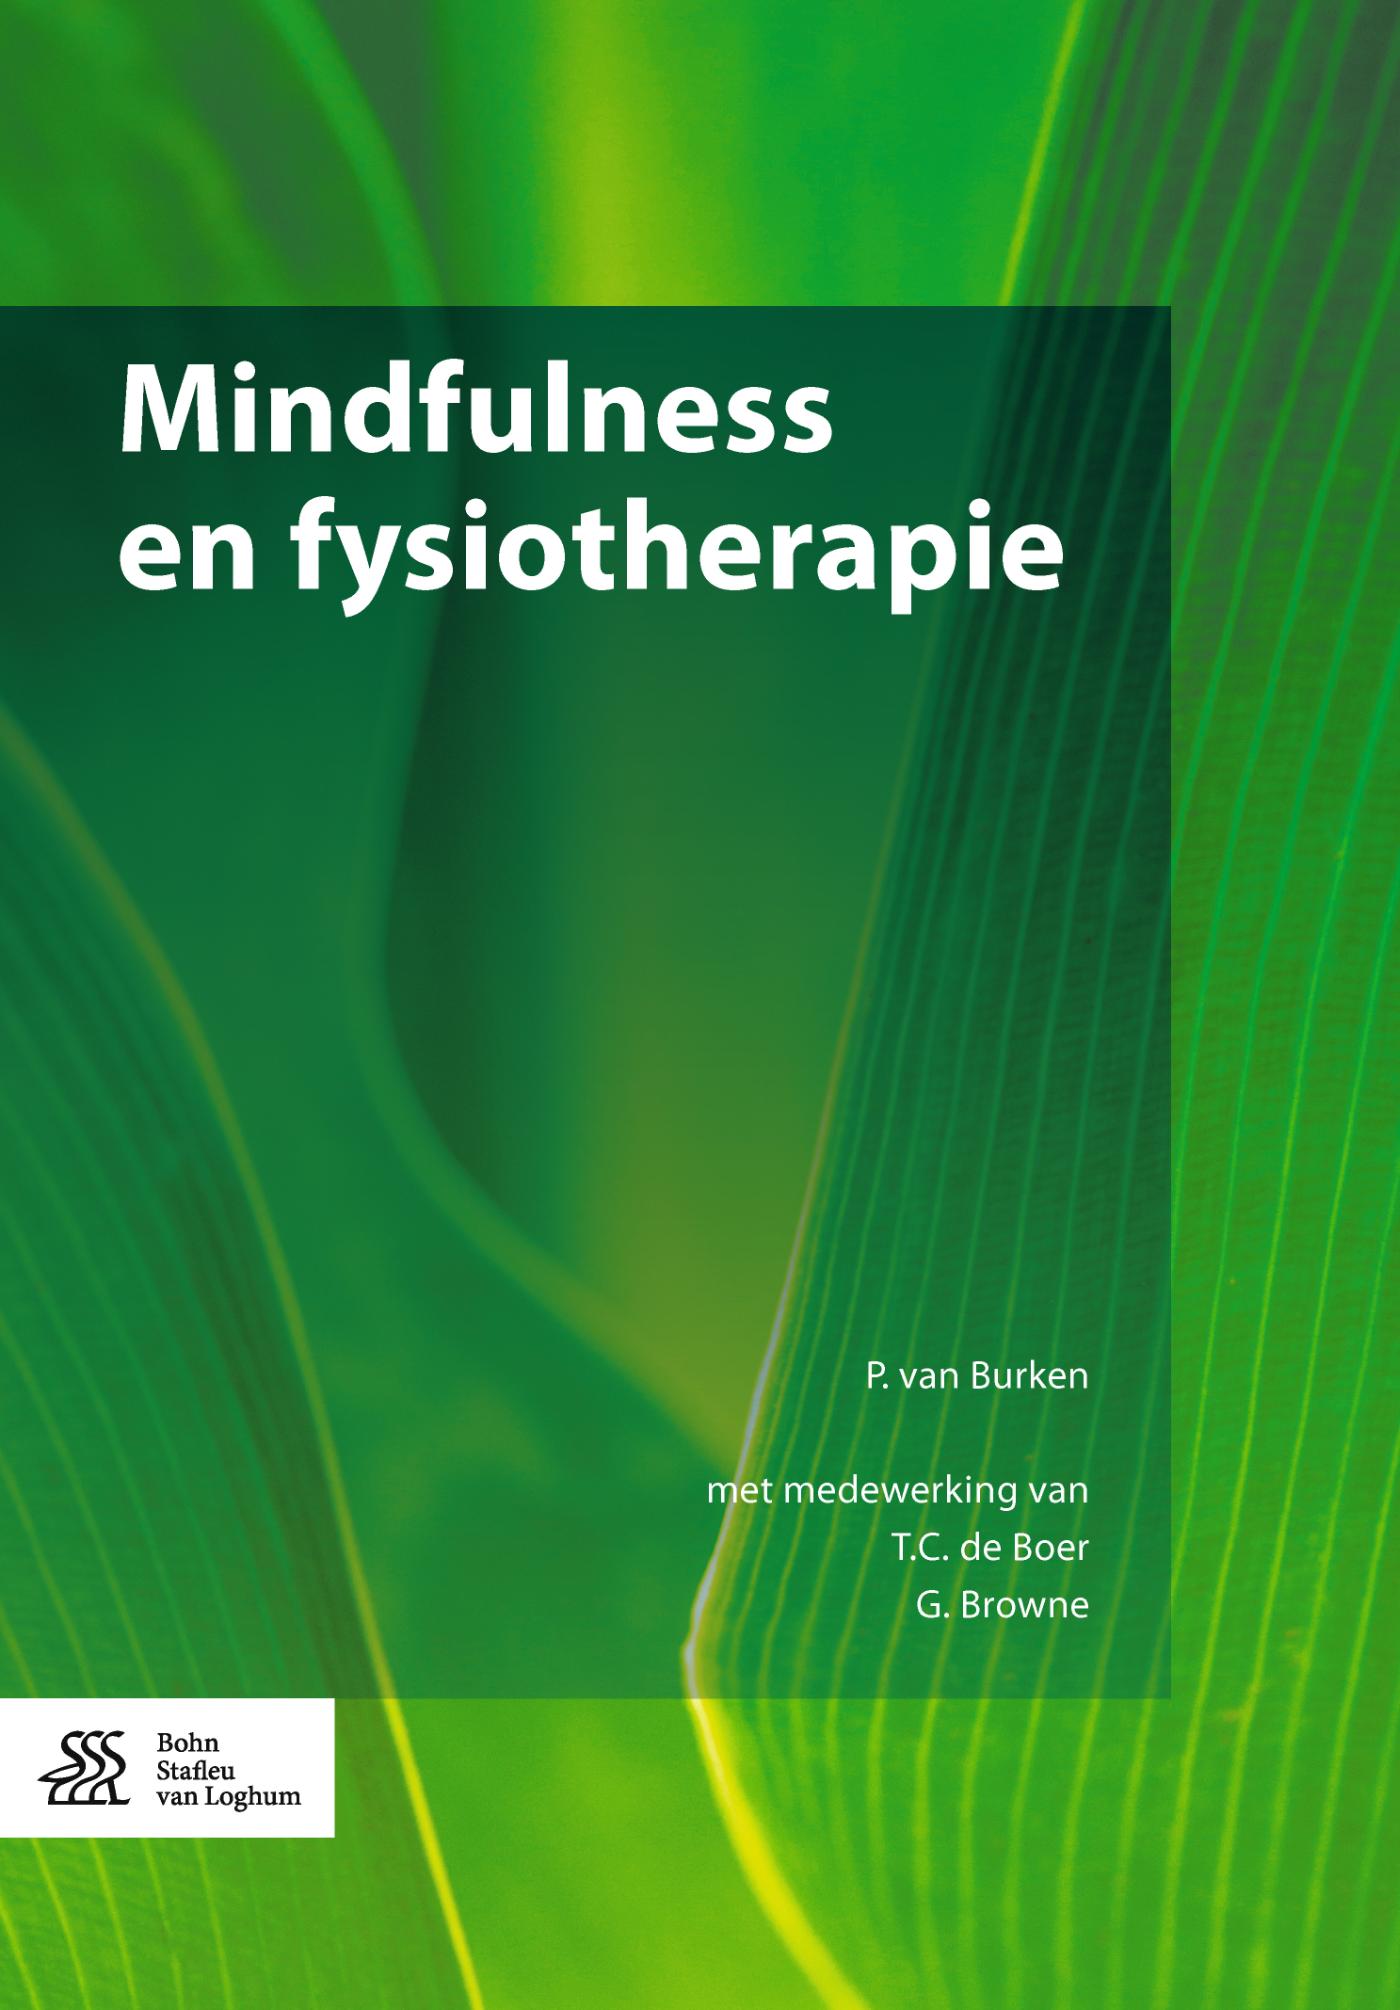 Mindfulness en fysiotherapie (Ebook)